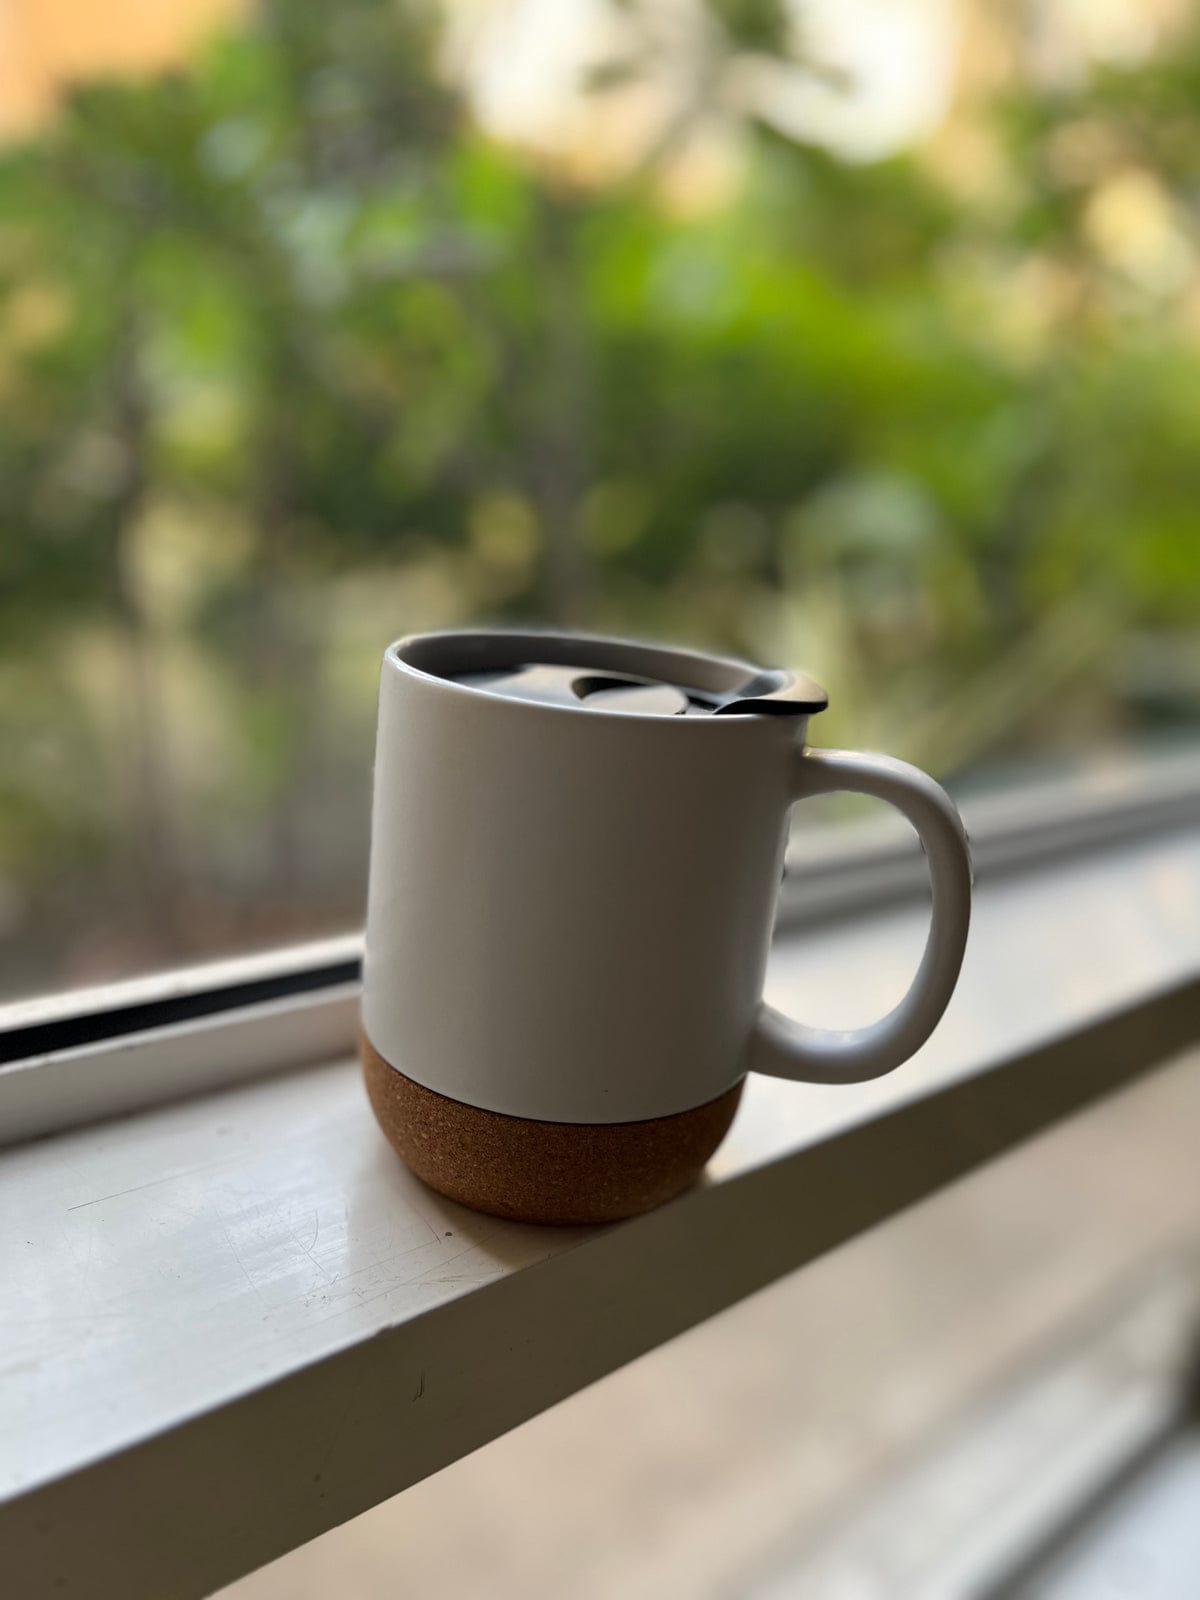 Ceramic Mug with Cork Bottom